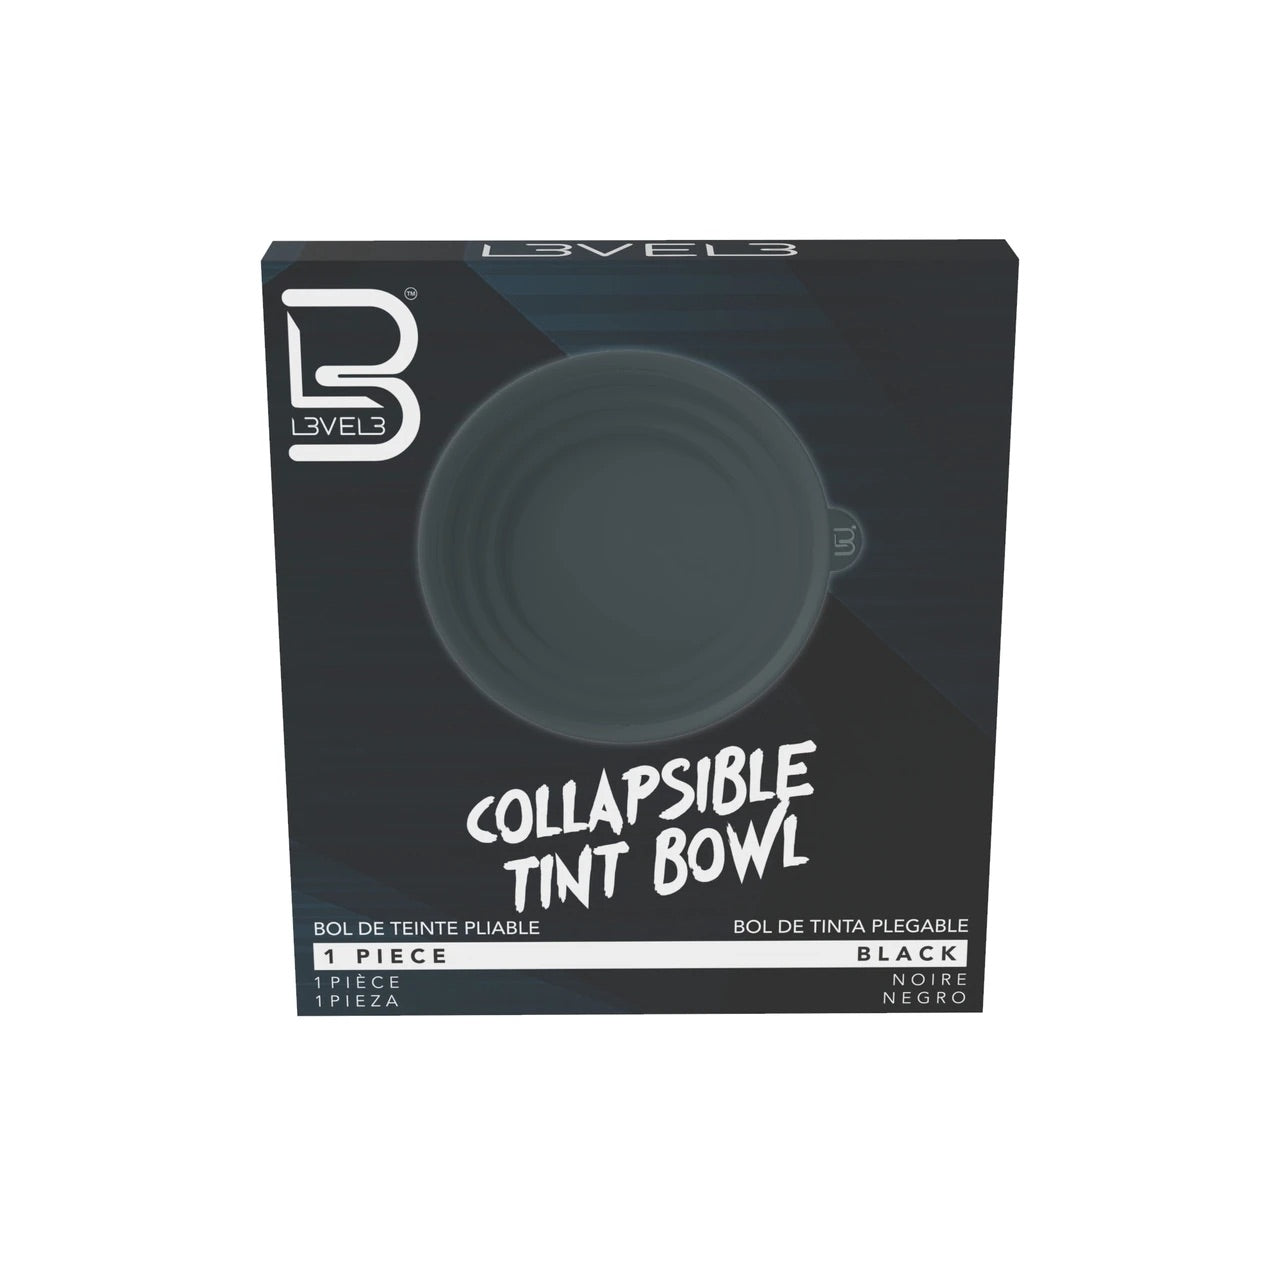 L3VEL3™ Collapsible Tint Bowl - Black